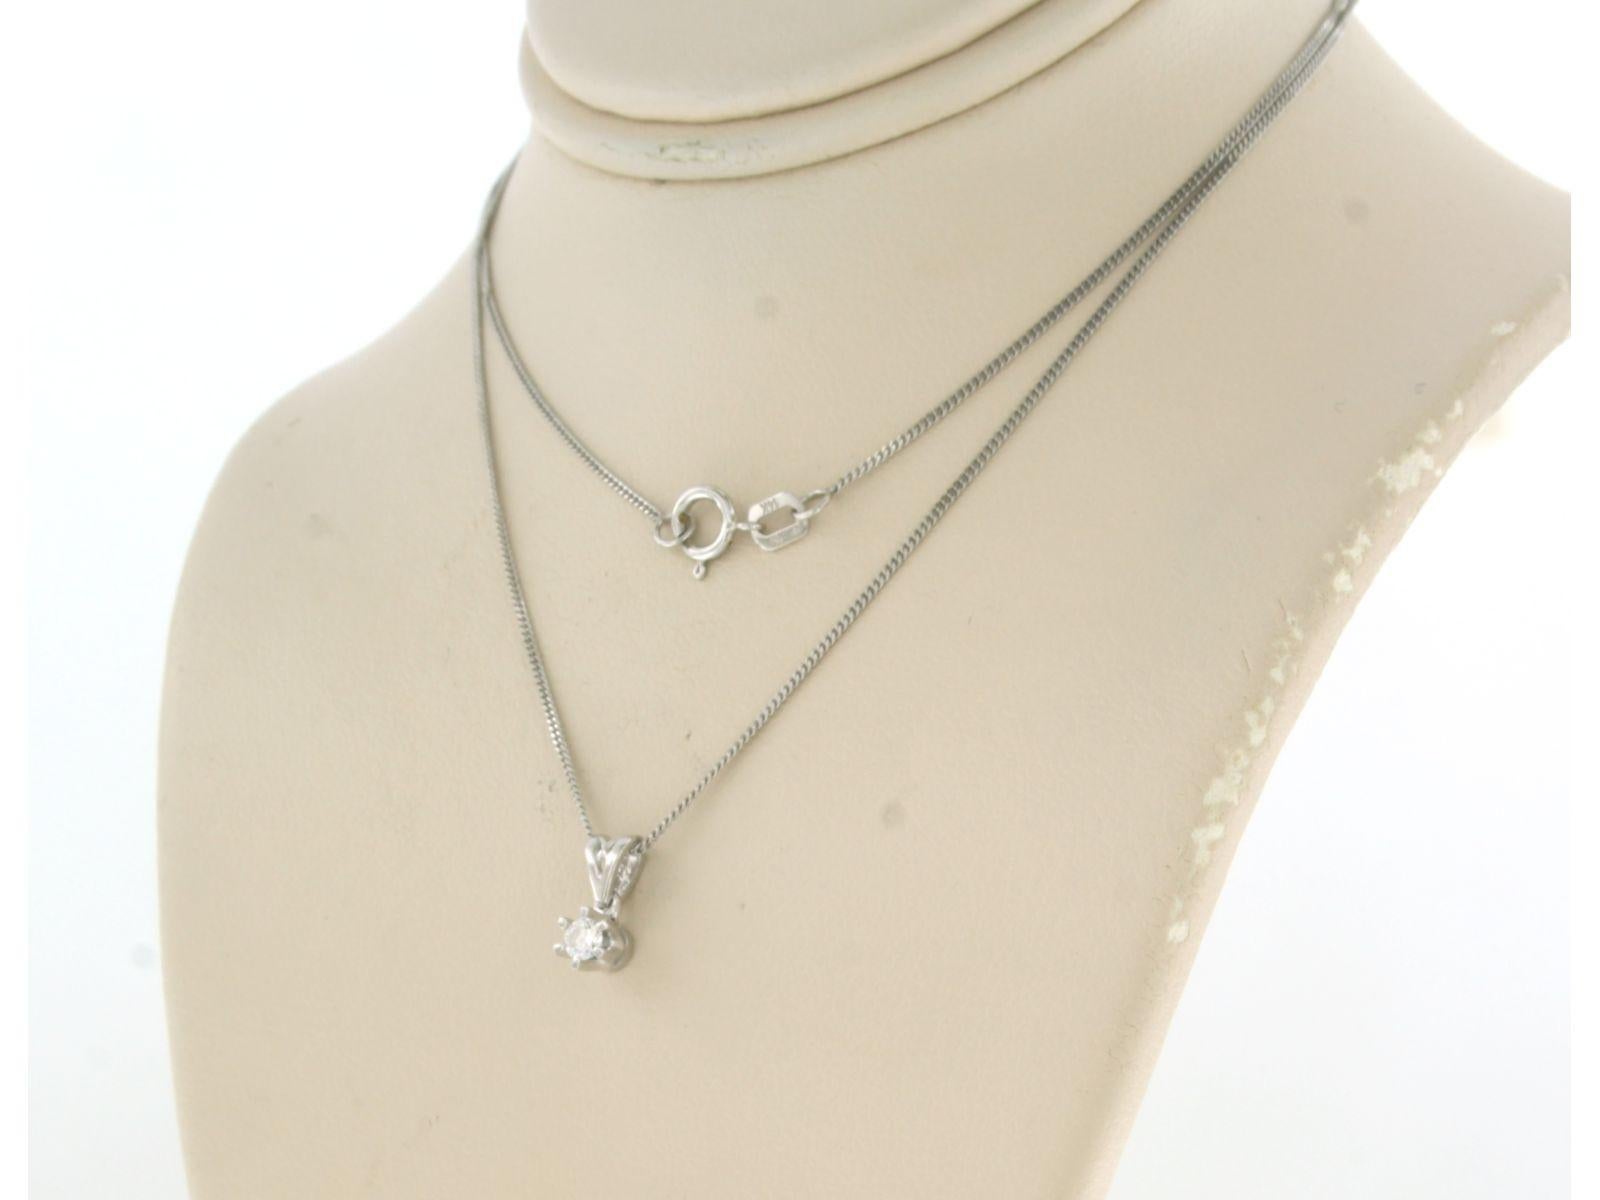 Brilliant Cut Necklace and solitair pendant set with brilliant cut diamonds 14k white gold For Sale